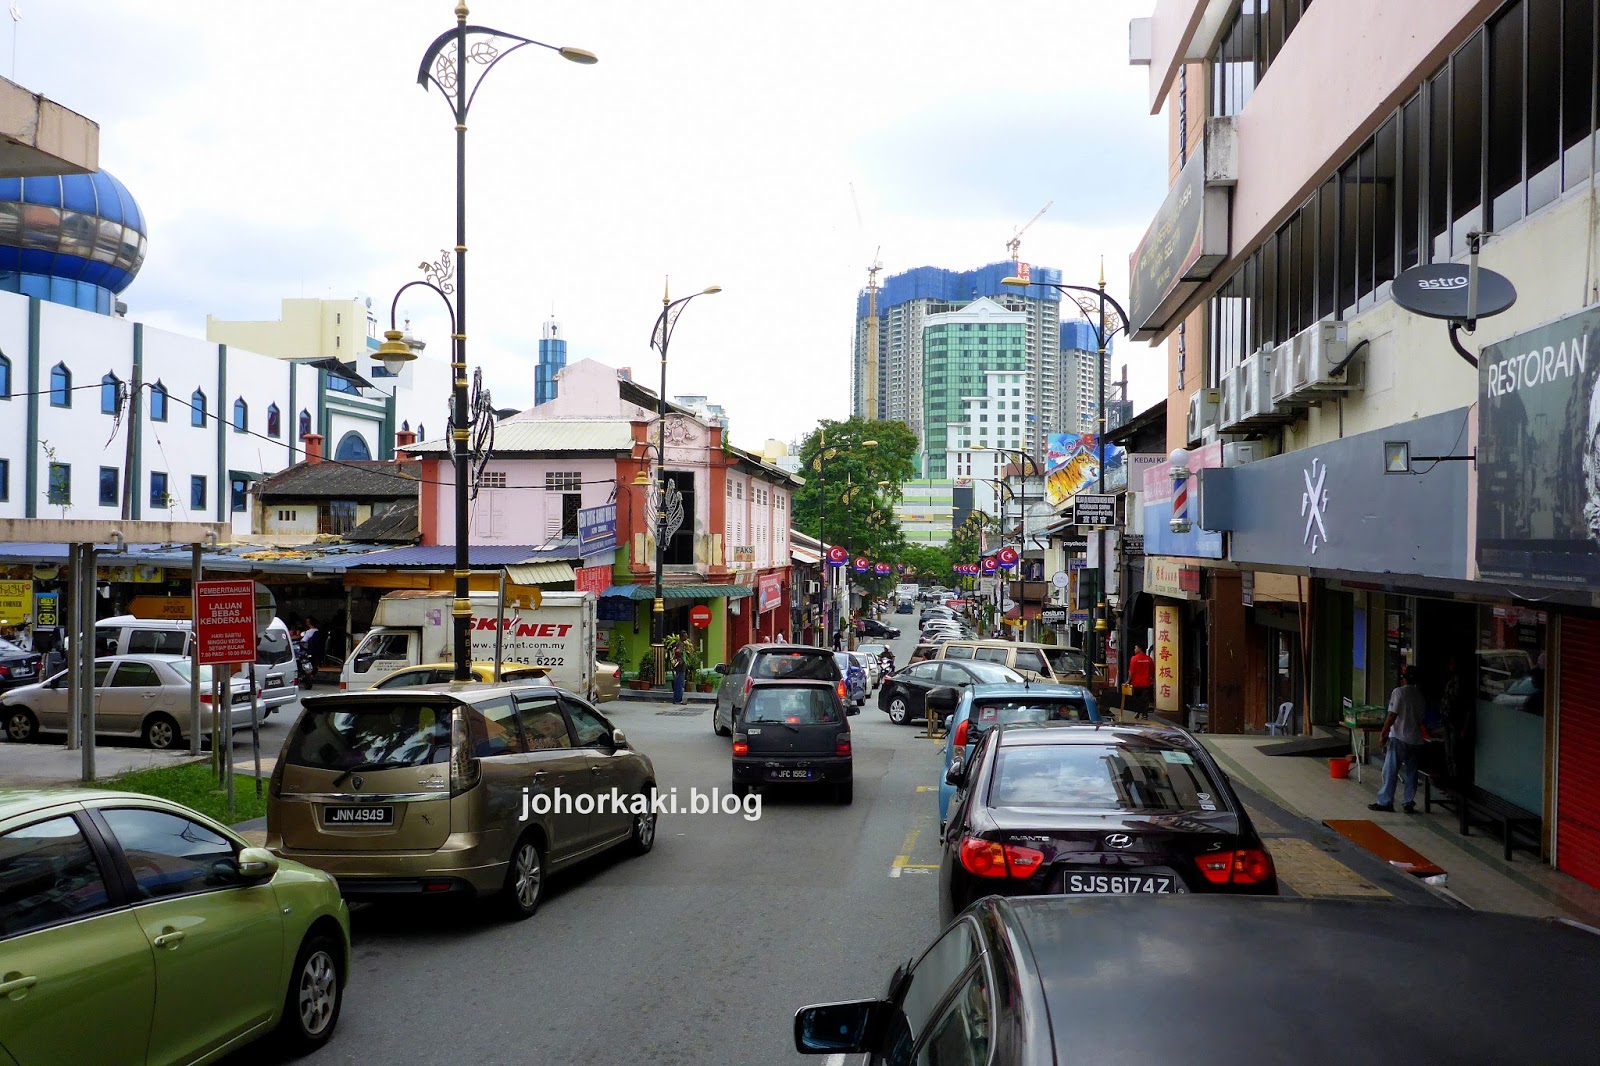 2017 Walking Guide to Good Food & Cafes near Johor JB ...